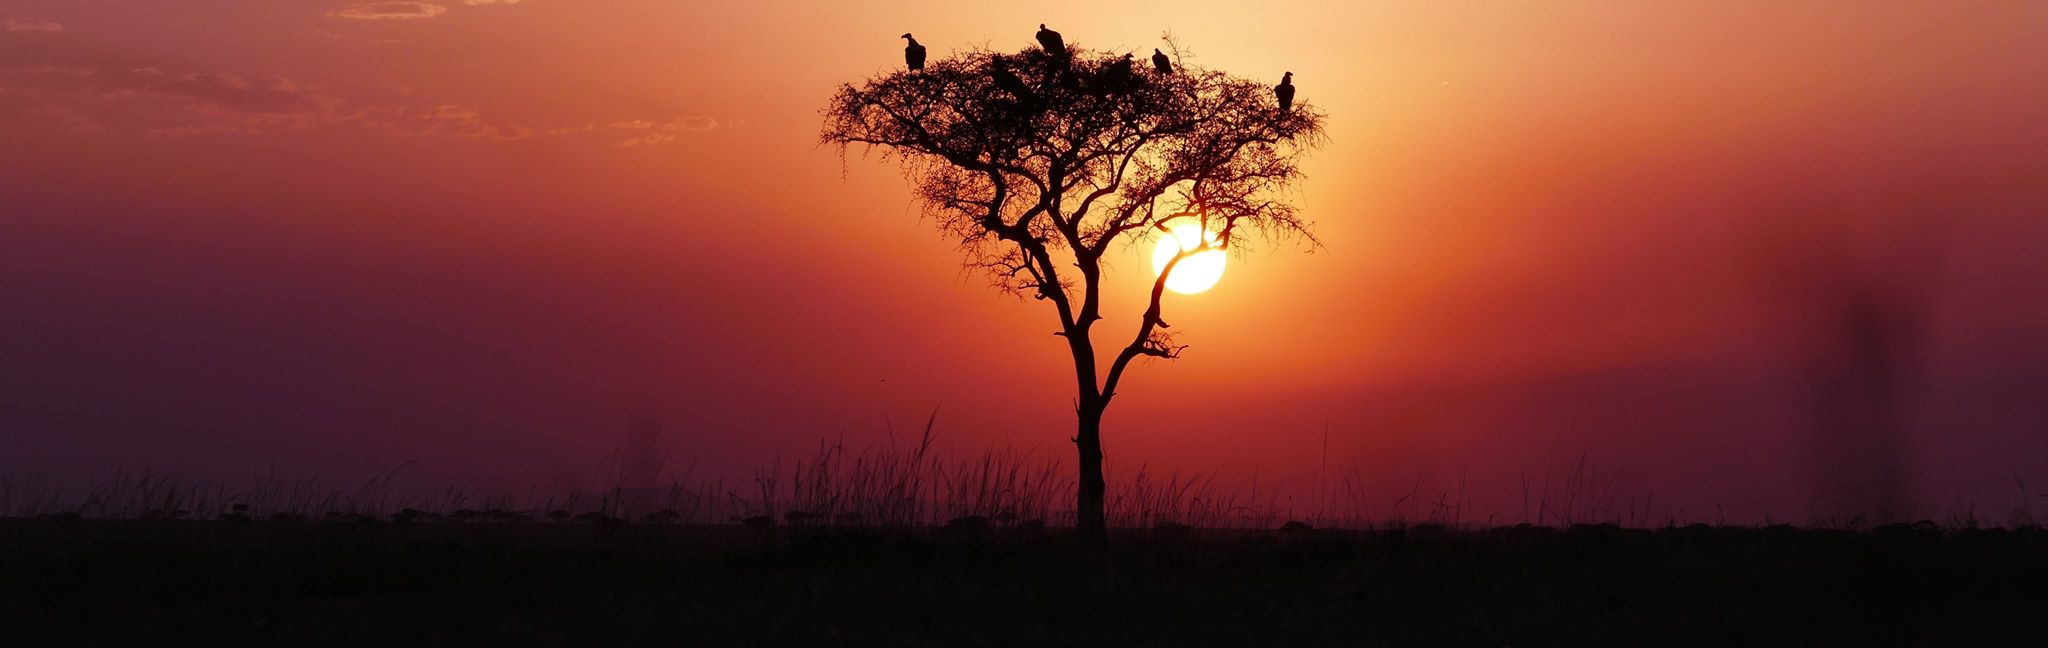 outback africa namibia safari empfehlung